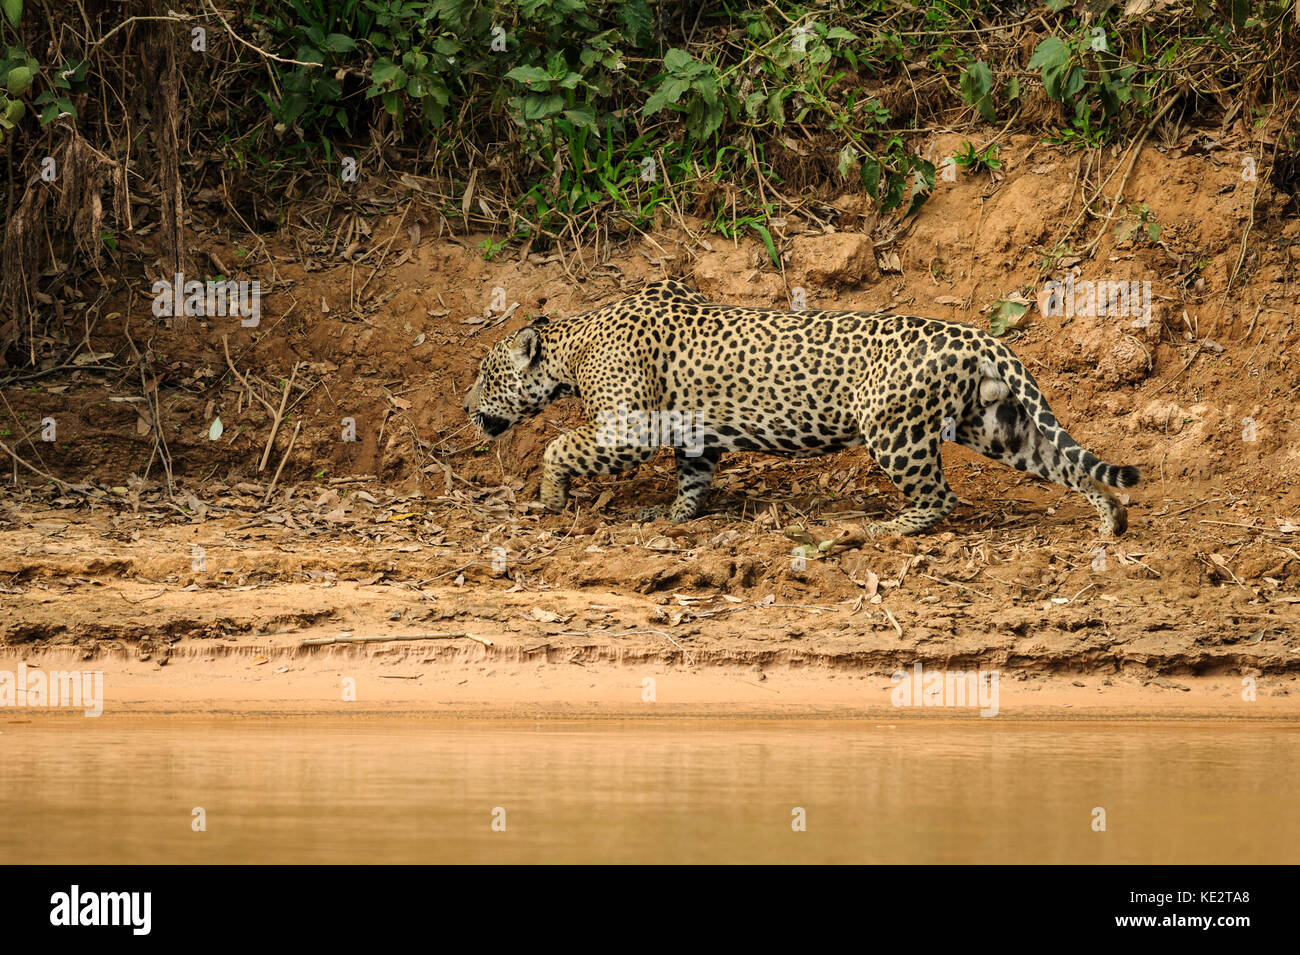 A Jaguar stalks a prey in the Pantanal, Brazil Stock Photo